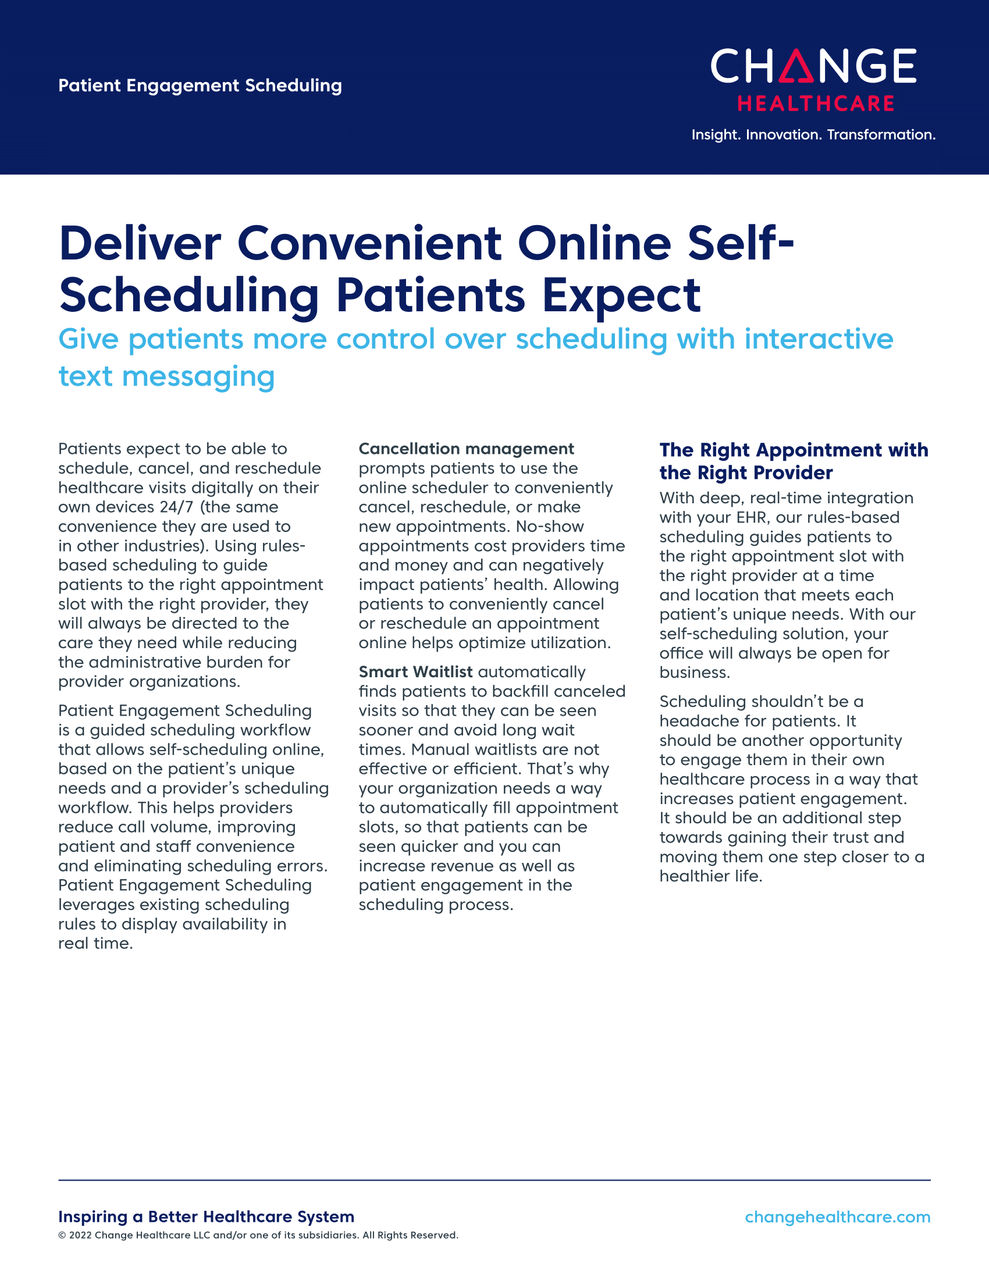 Scheduling Patient Engagement Fact Sheet